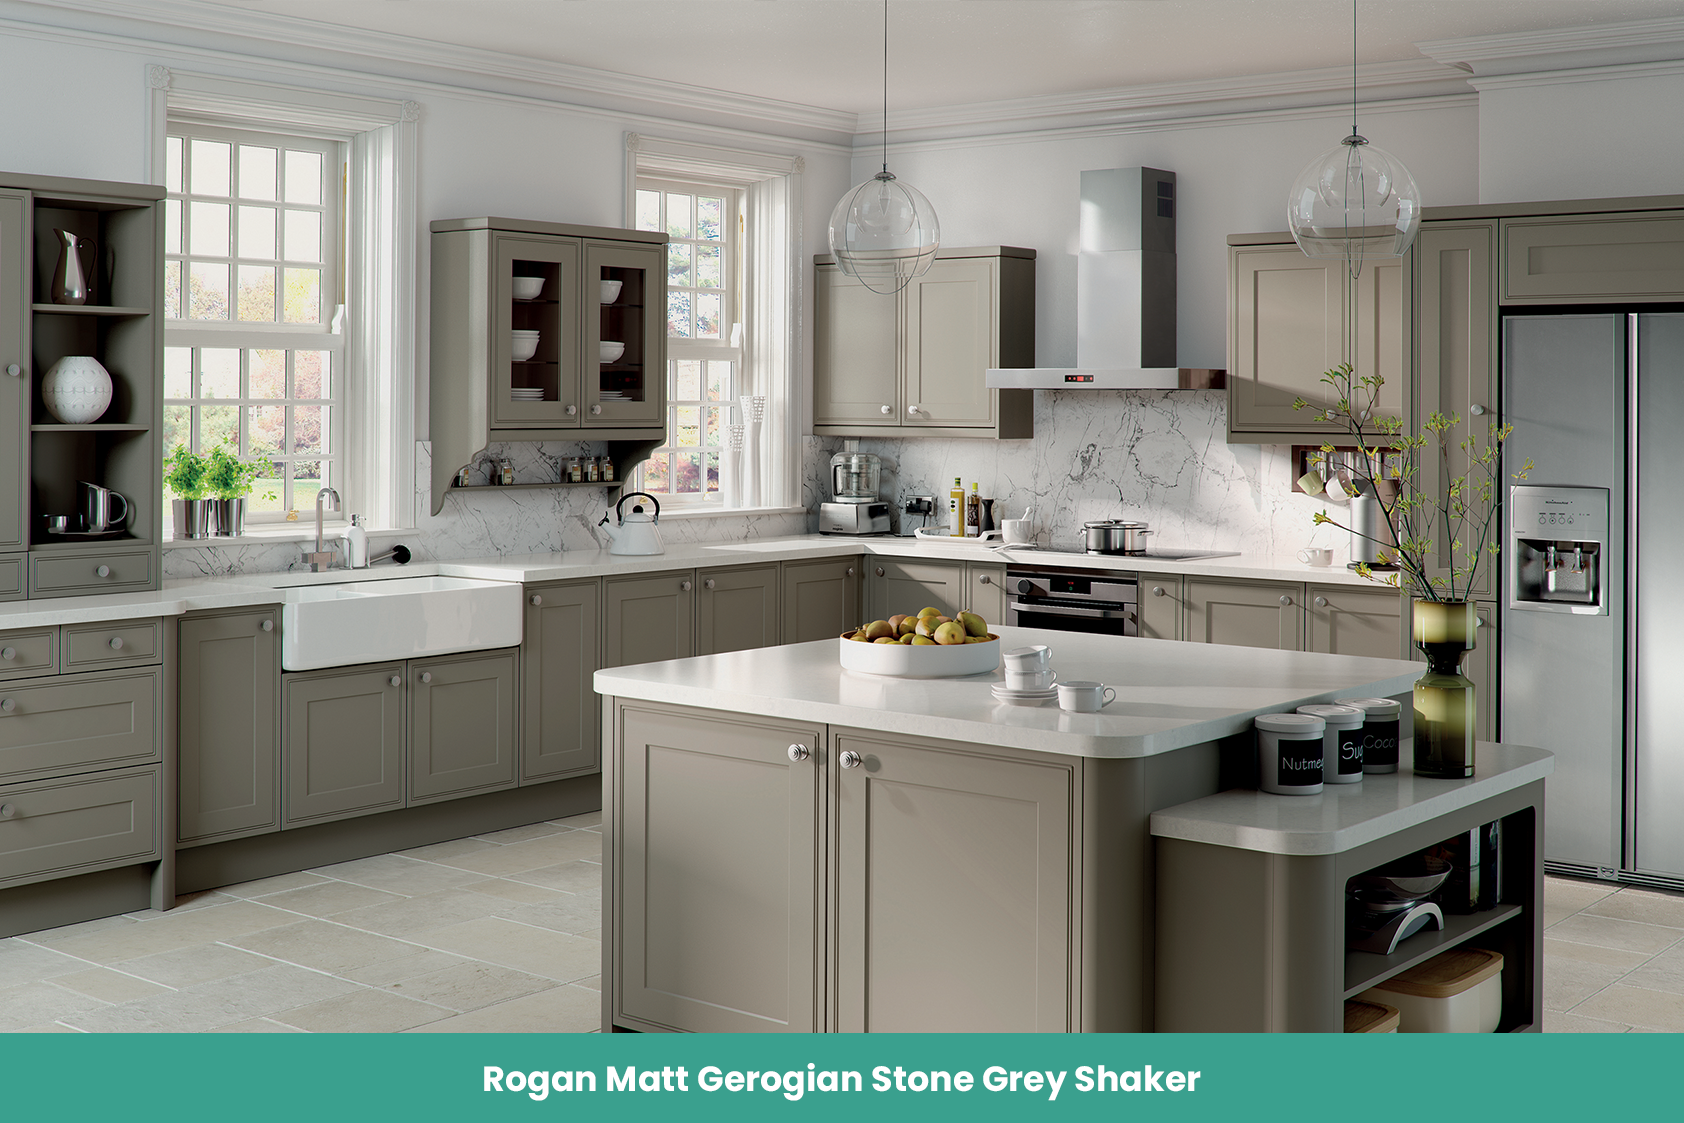 Rogan Matt Gerogian Stone Grey Shaker Kitchen